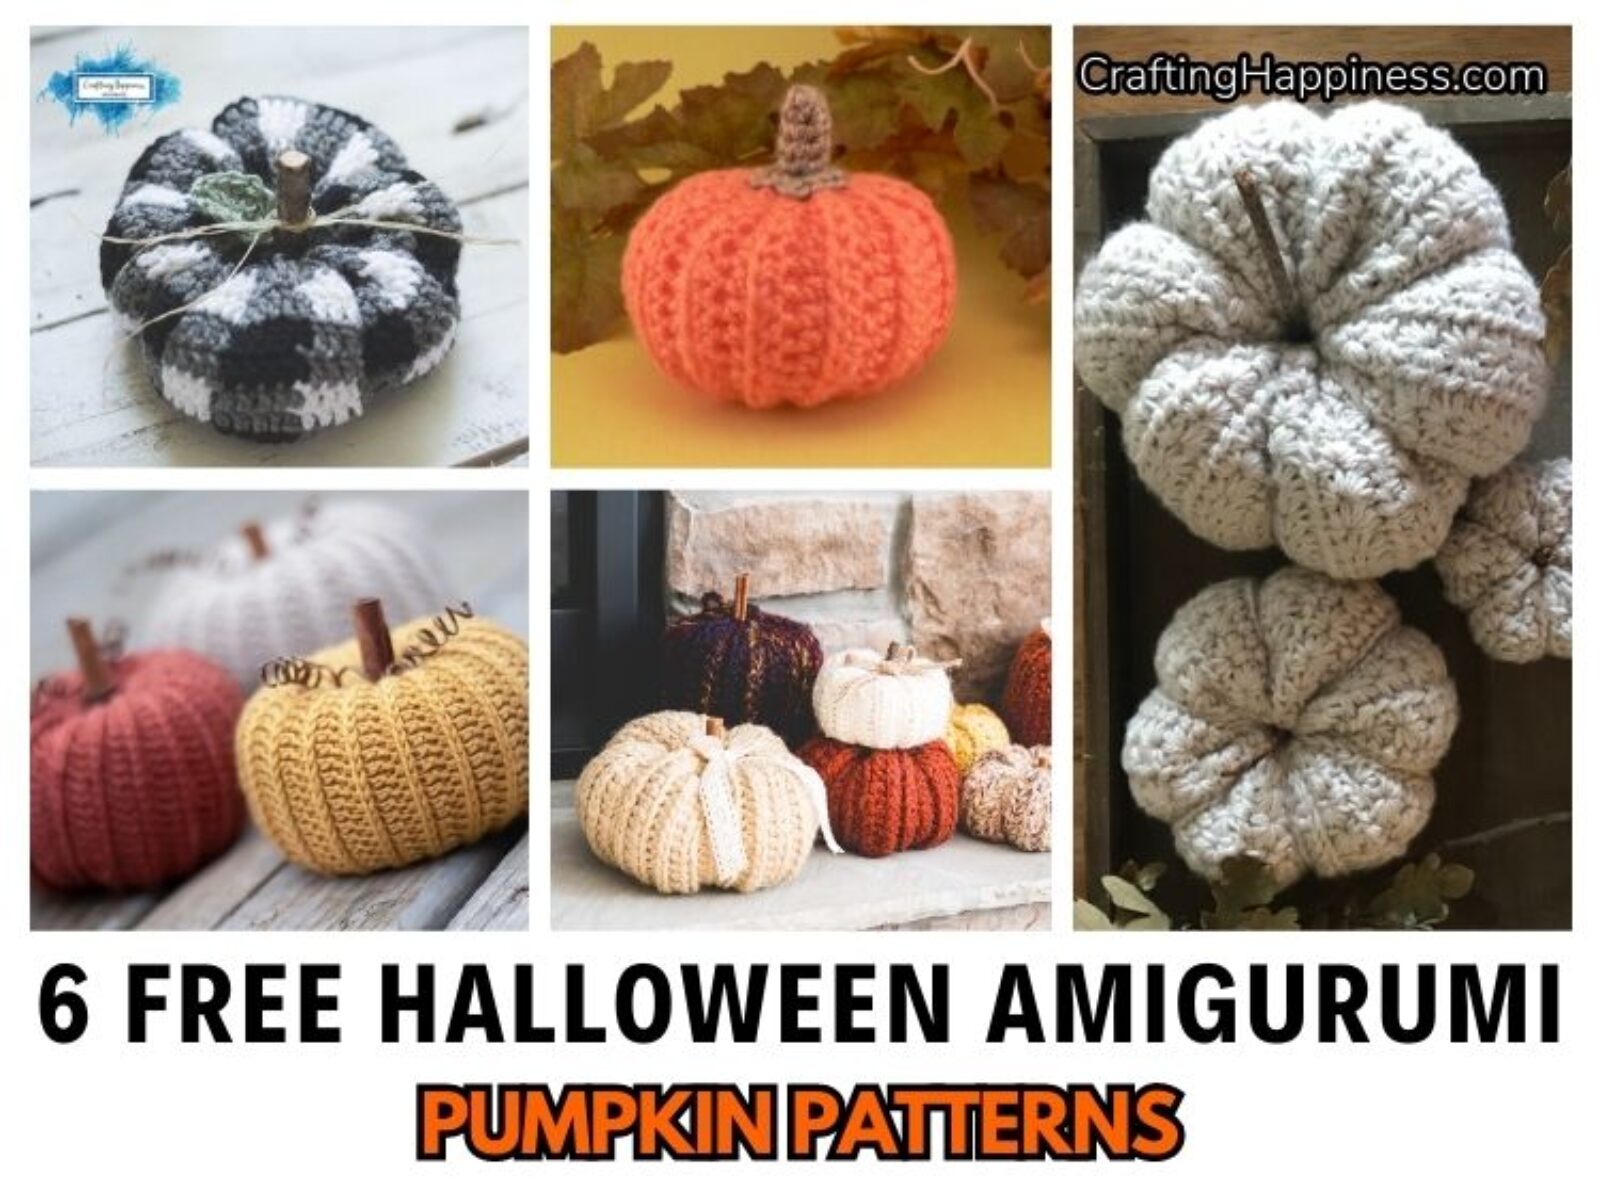 FB POSTER - 6 Free Halloween Amigurumi Pumpkin Patterns - Crafting Happiness